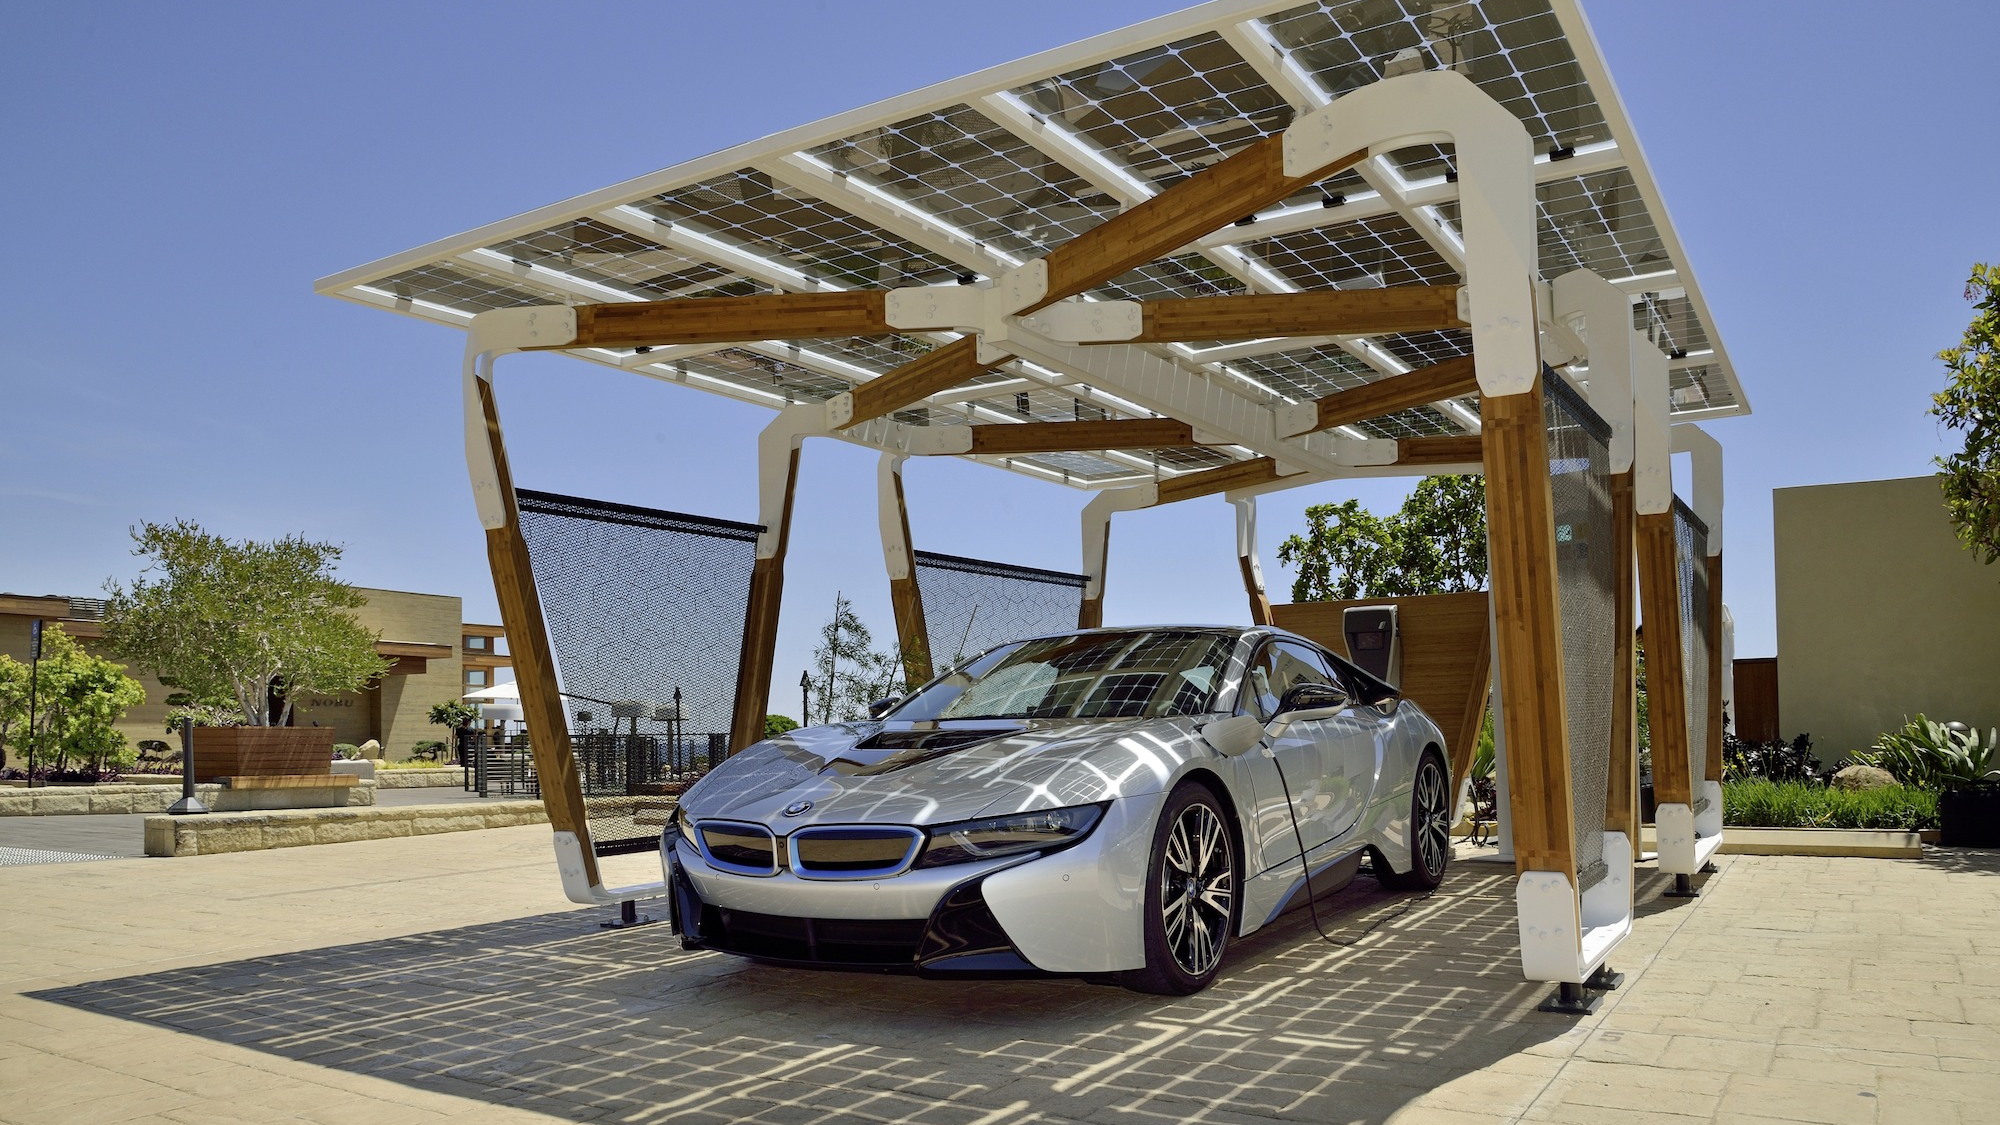 BMW DesignworksUSA solar carport concept